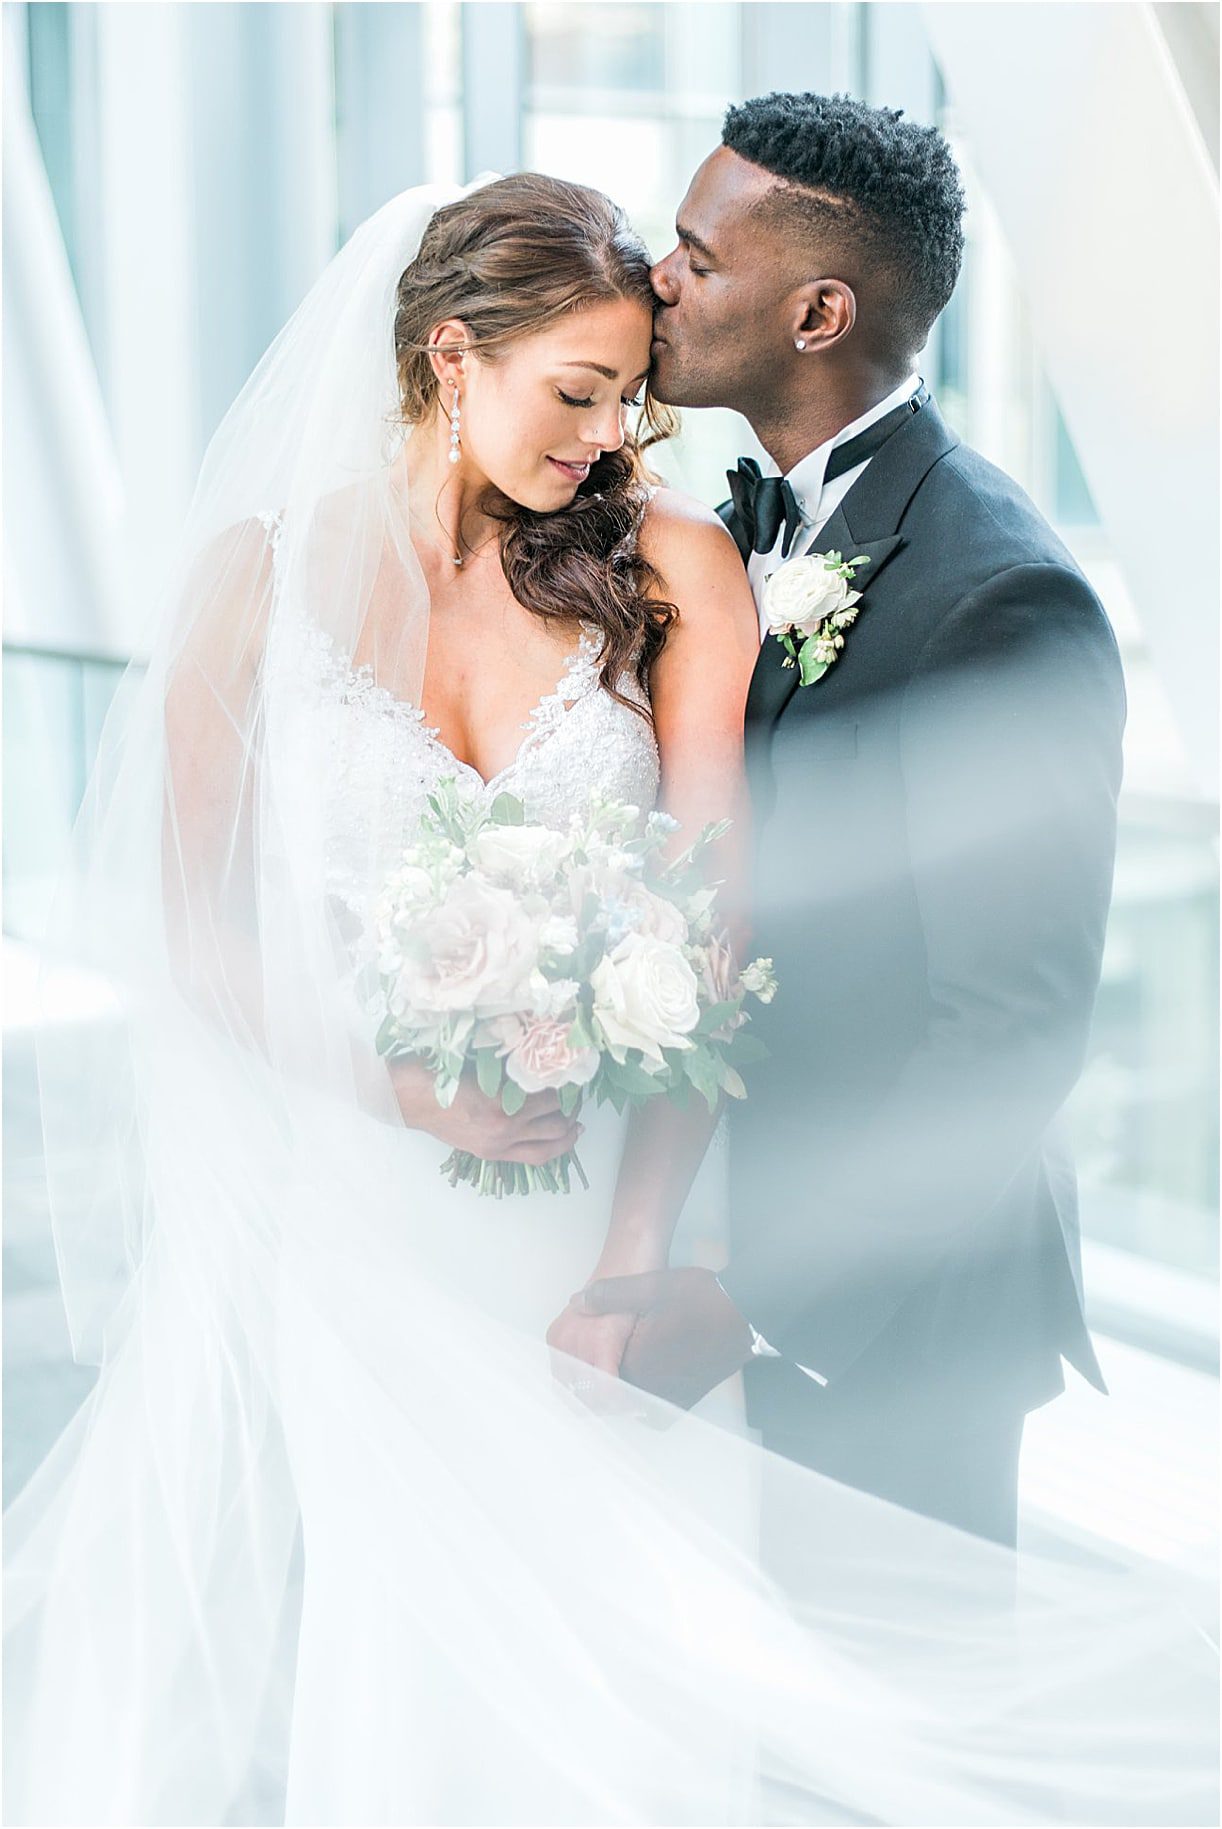 Wedding Photography Tips - Advice from the Pros | Hill City Bride Virginia Wedding Blog